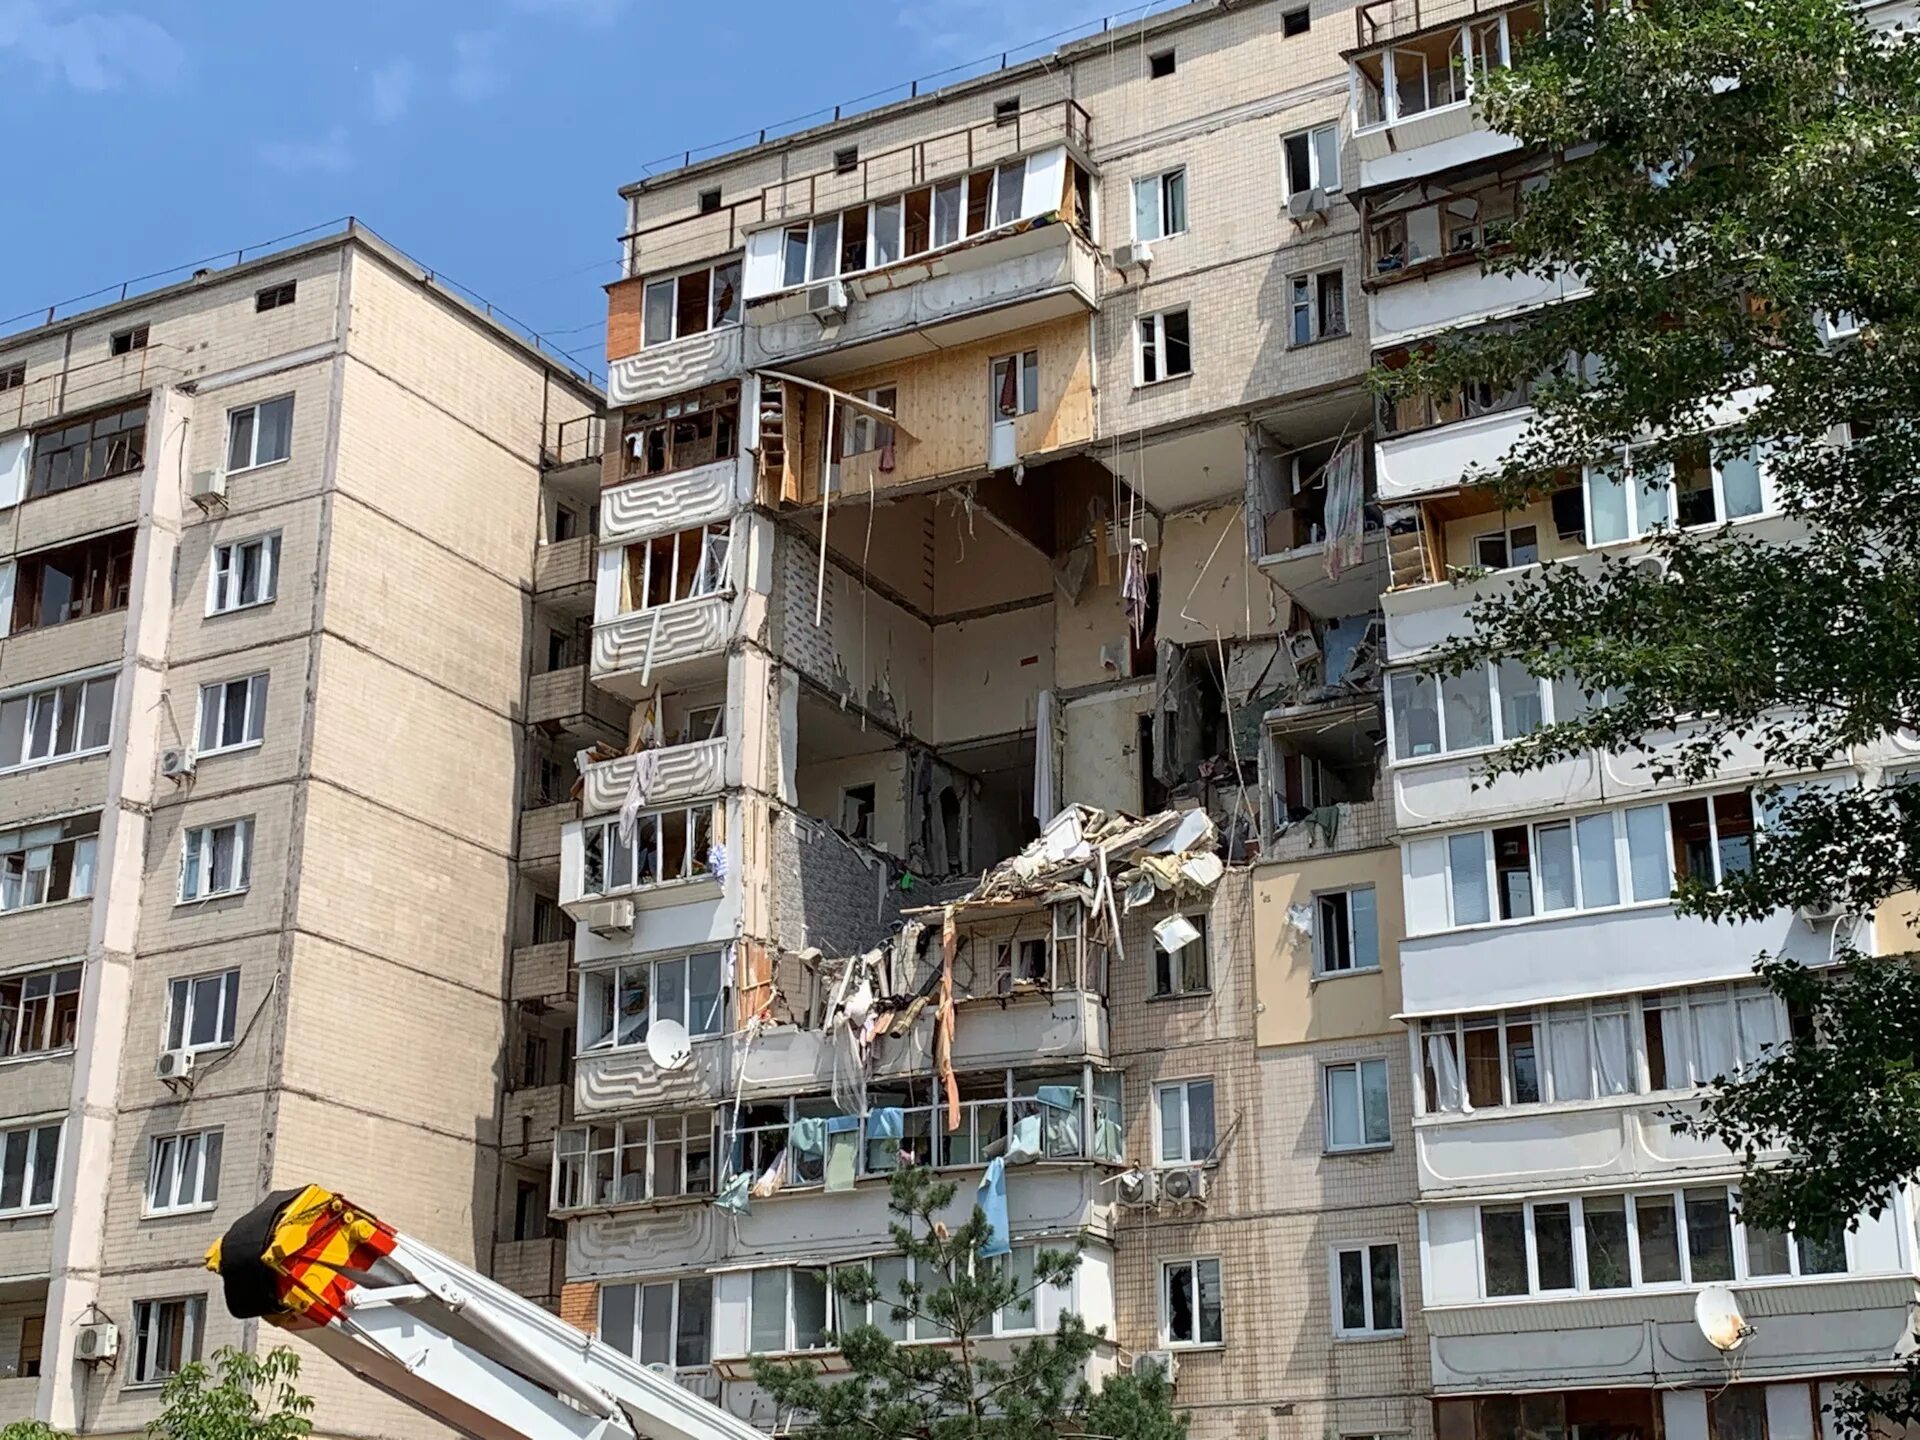 Квартира разрушение. Разрушенная многоэтажка квартира. Взрыв дома. Взорванный дом в Киеве. Разрушенный взрывом дом